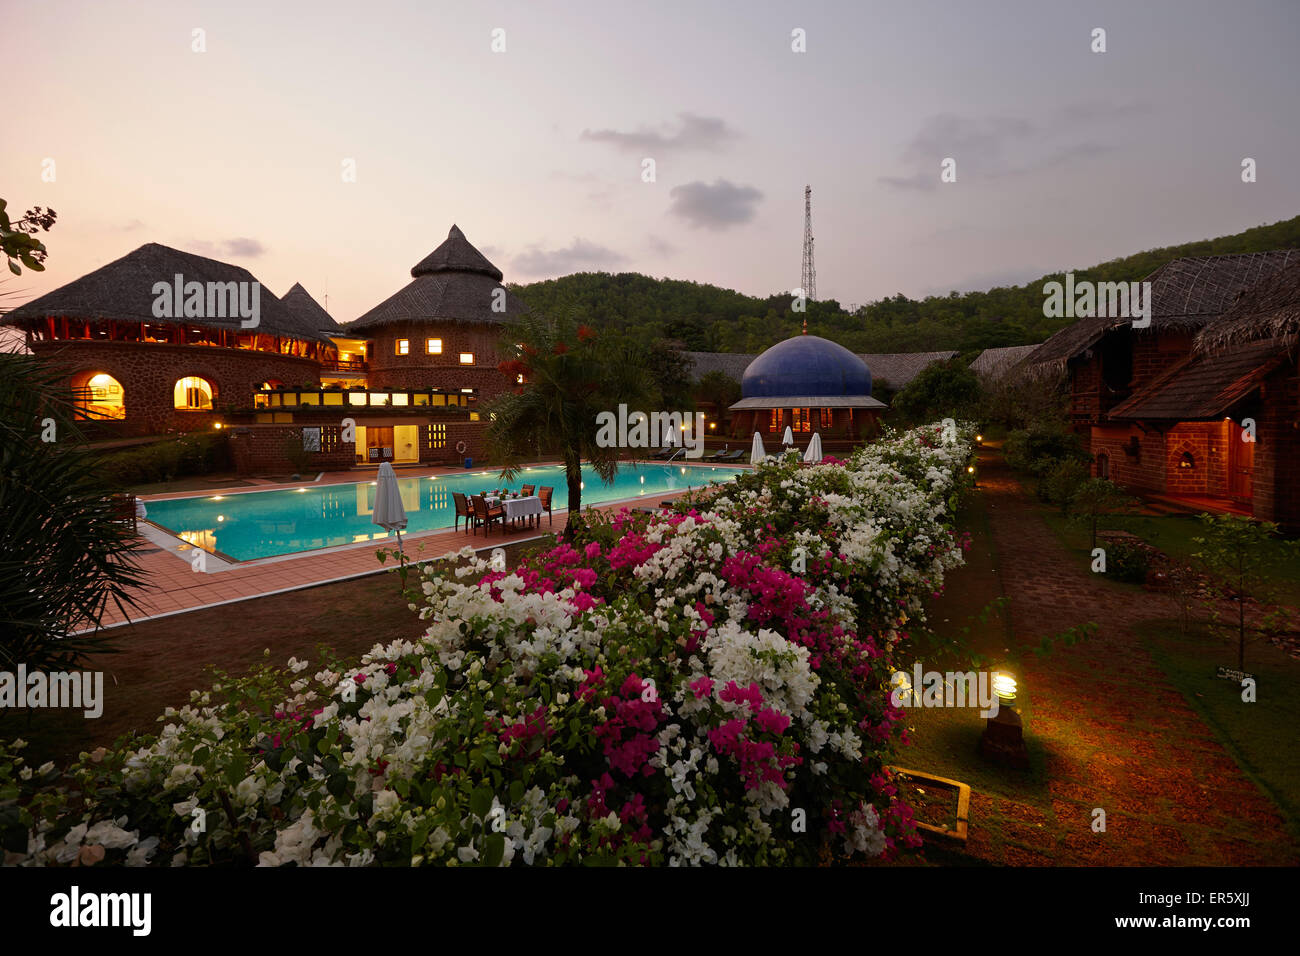 Pool, restaurant and bungalows of a hotel in the evening, Gokarna, Karnataka, India Stock Photo